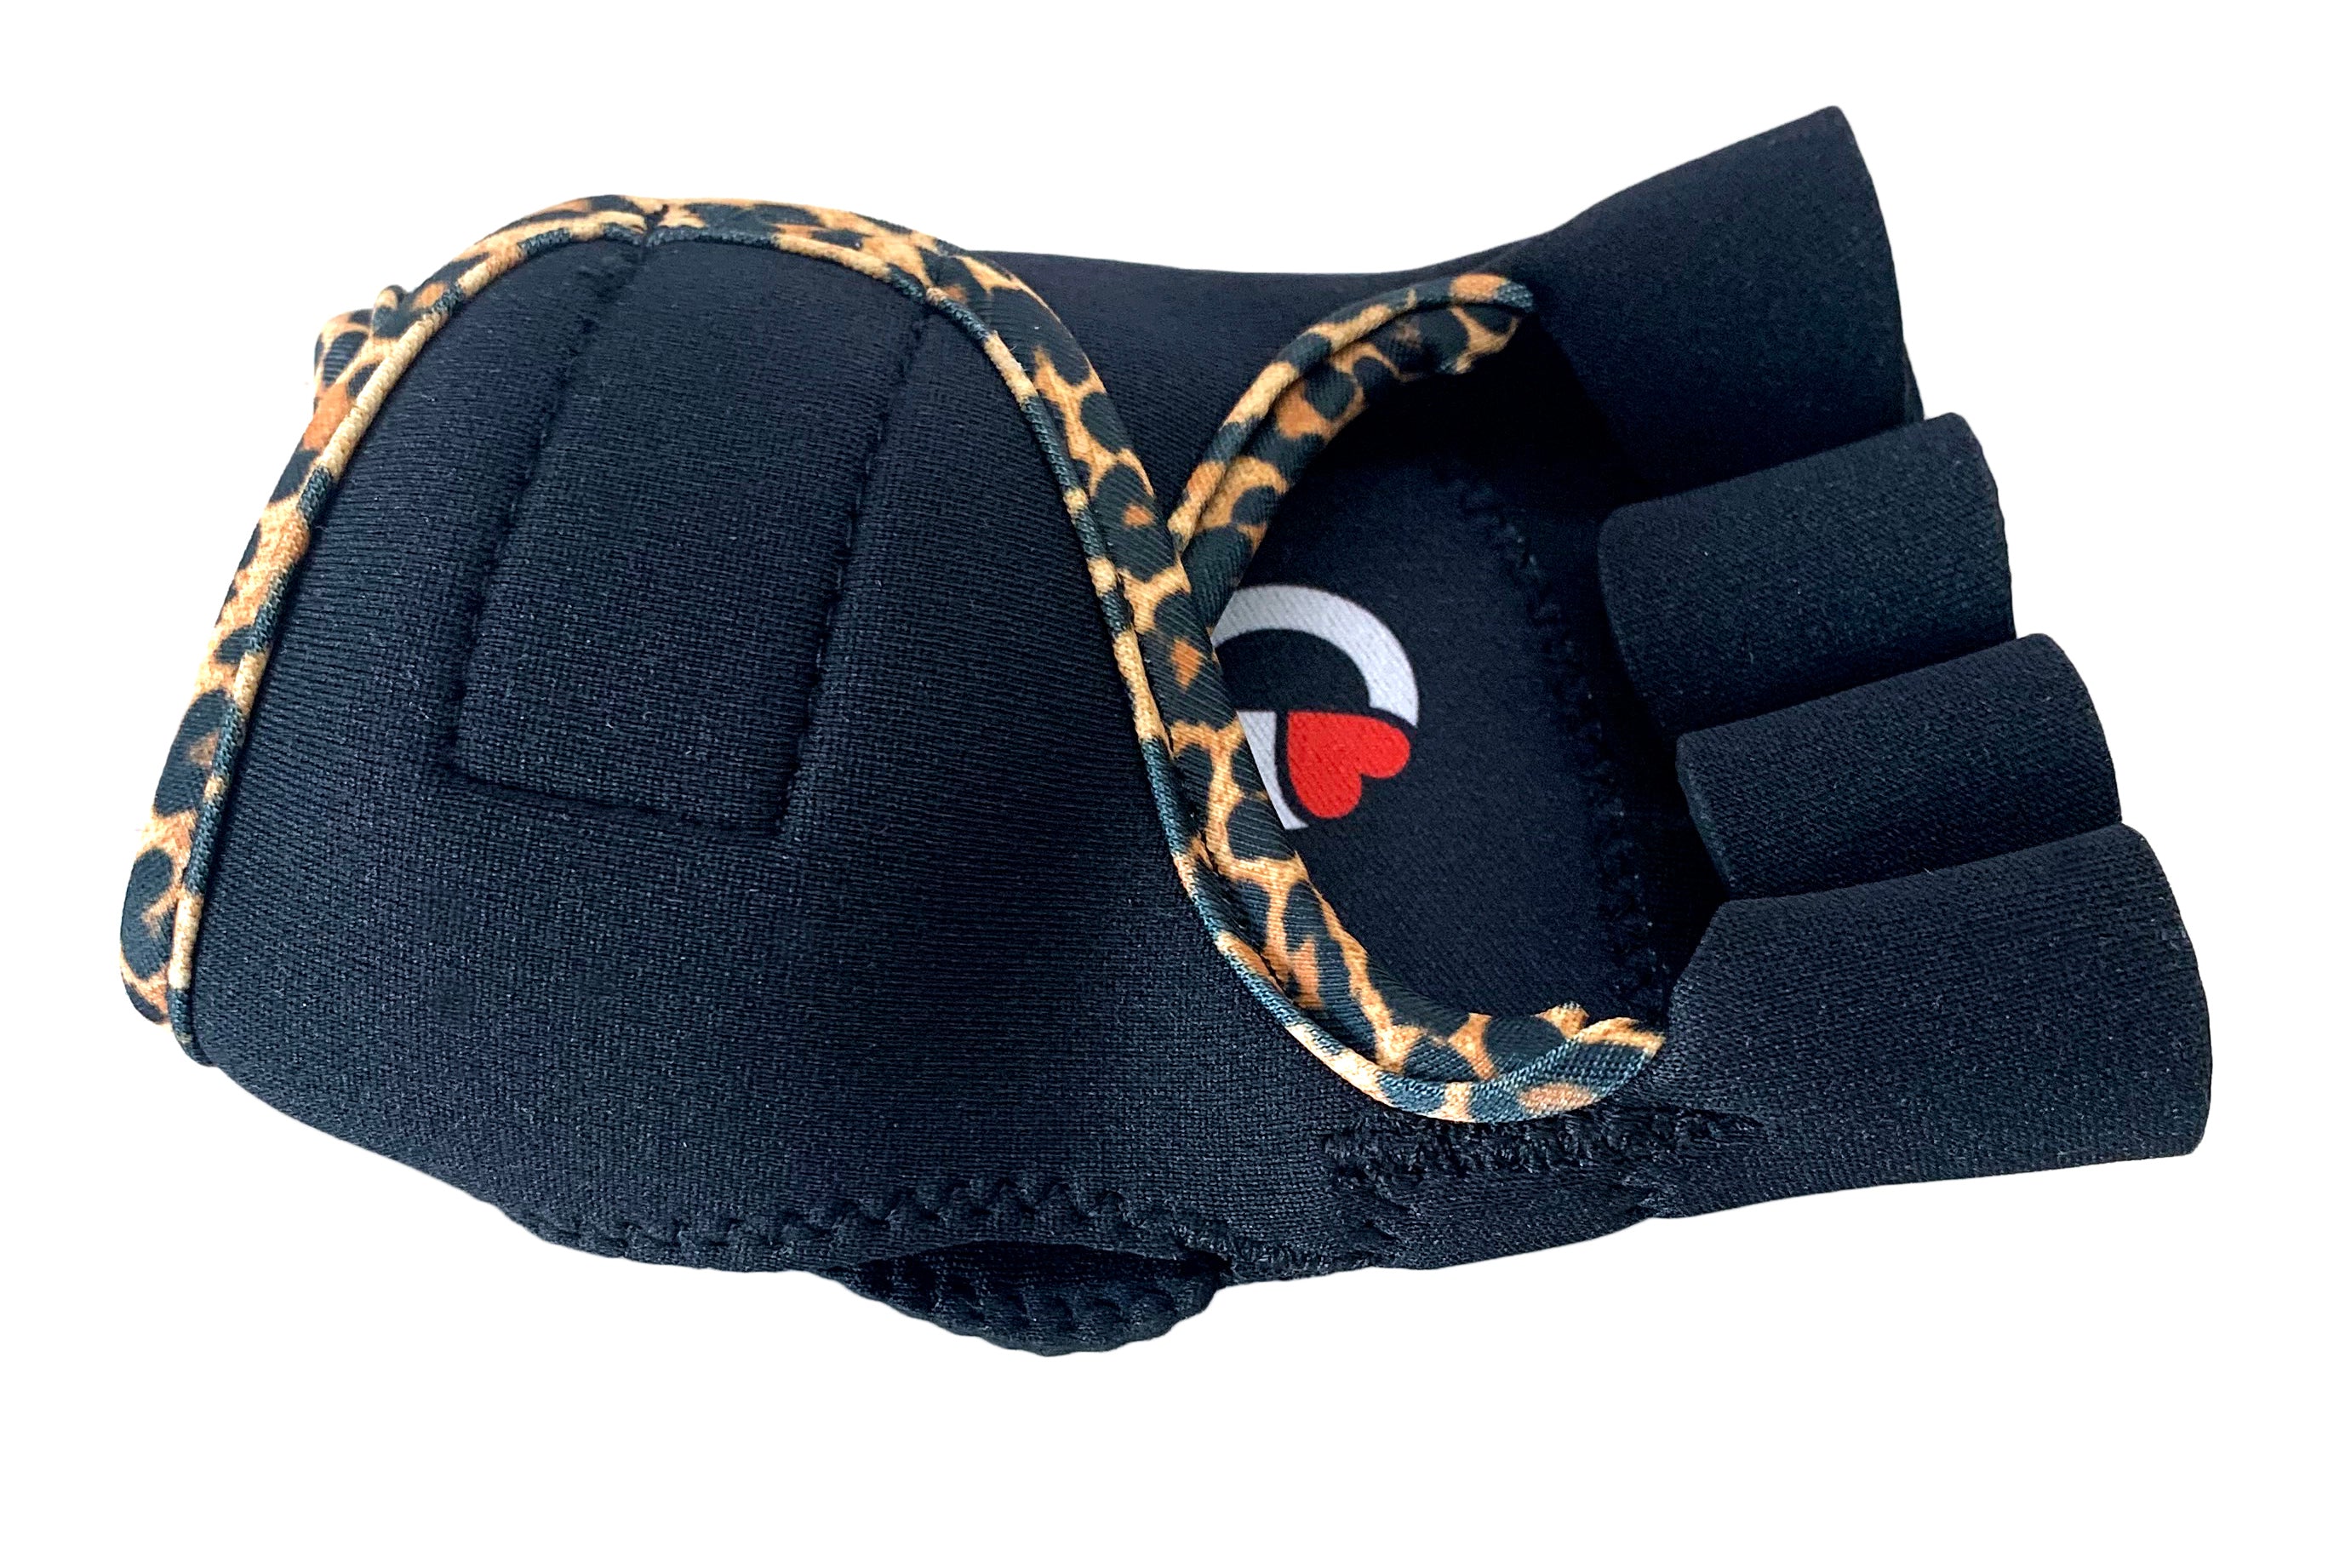 Women's Gym Gloves | Leopard Workout Gloves | G-Loves